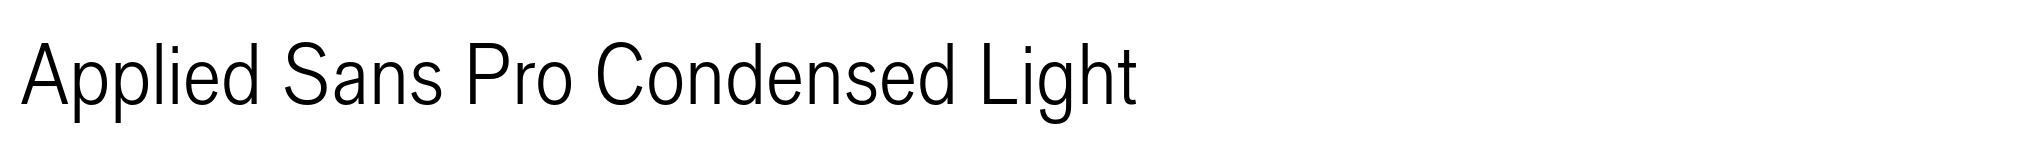 Applied Sans Pro Condensed Light image